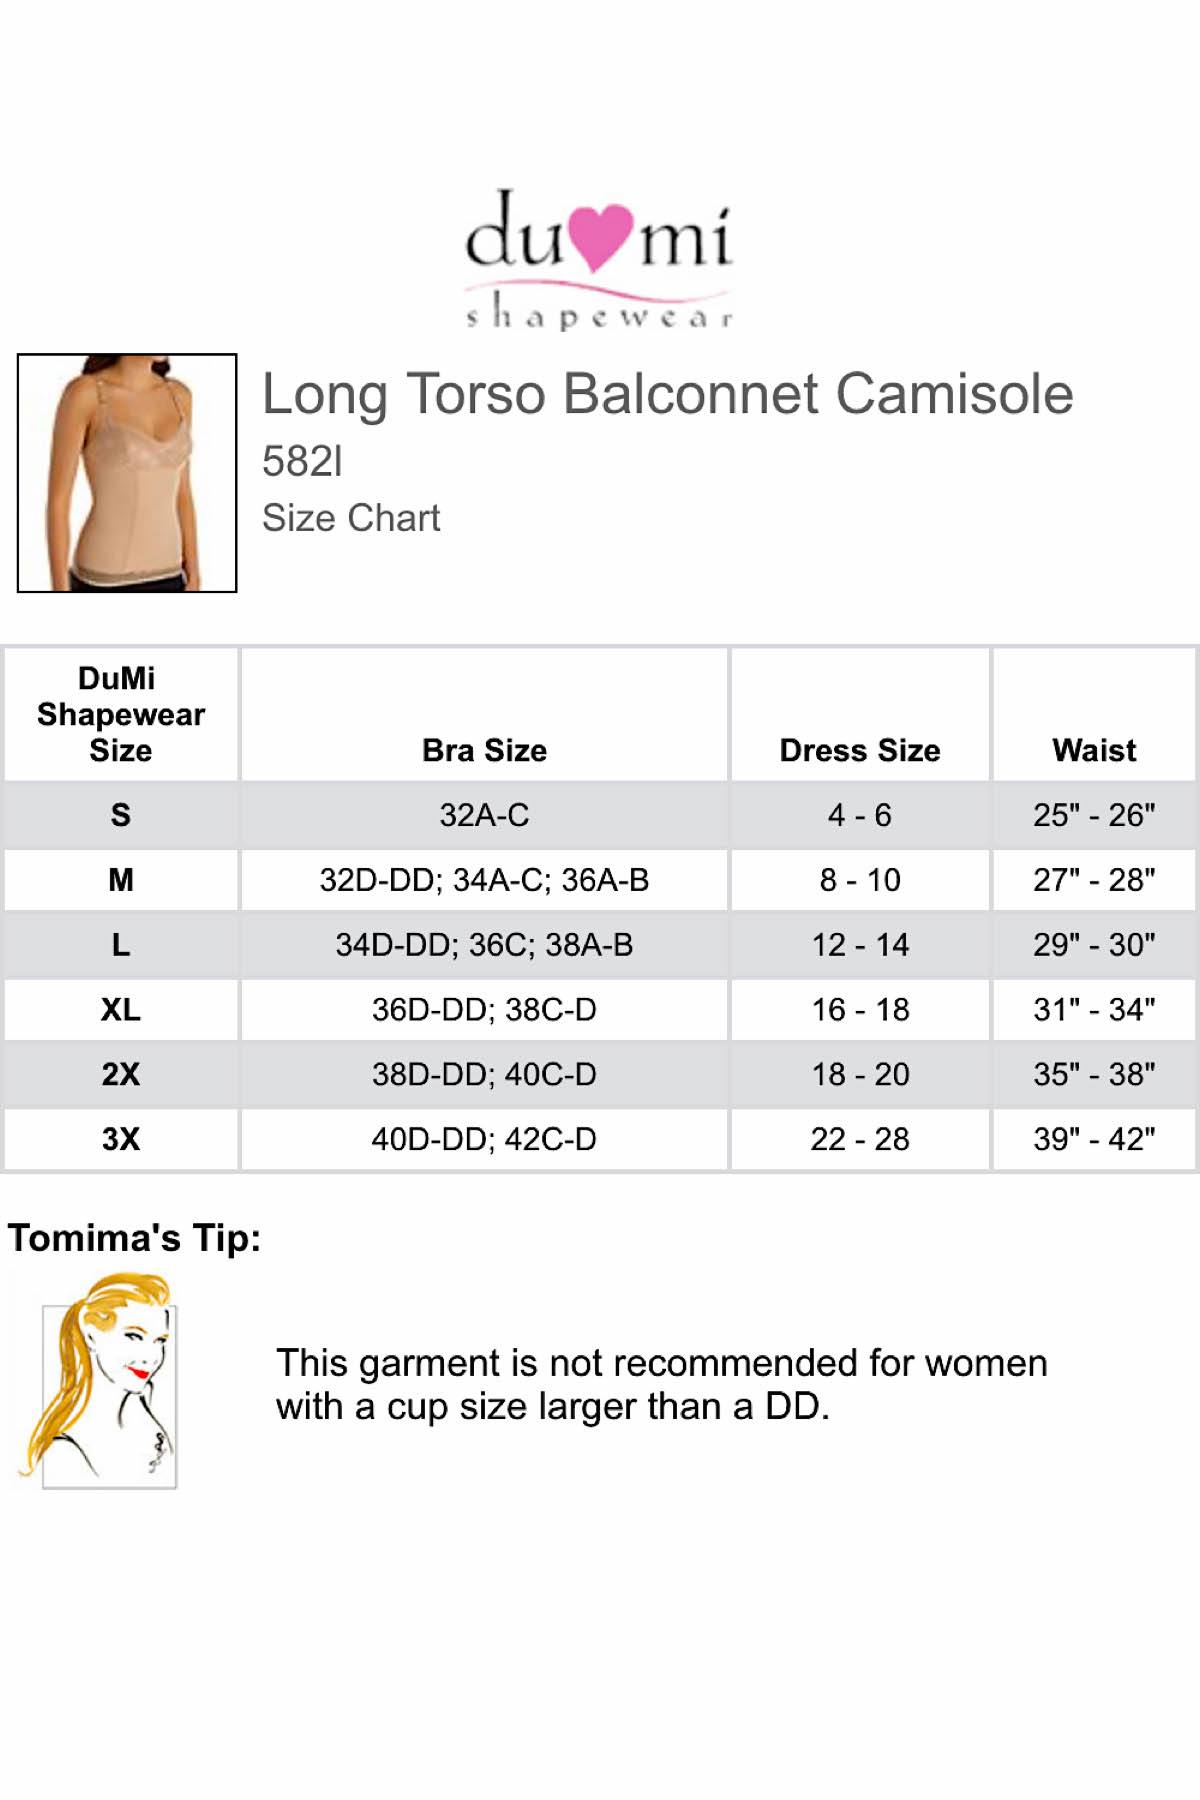 DuMi Shapewear Lace-Print Light-Control Long-Torso Contouring Balconette Bra Camisole